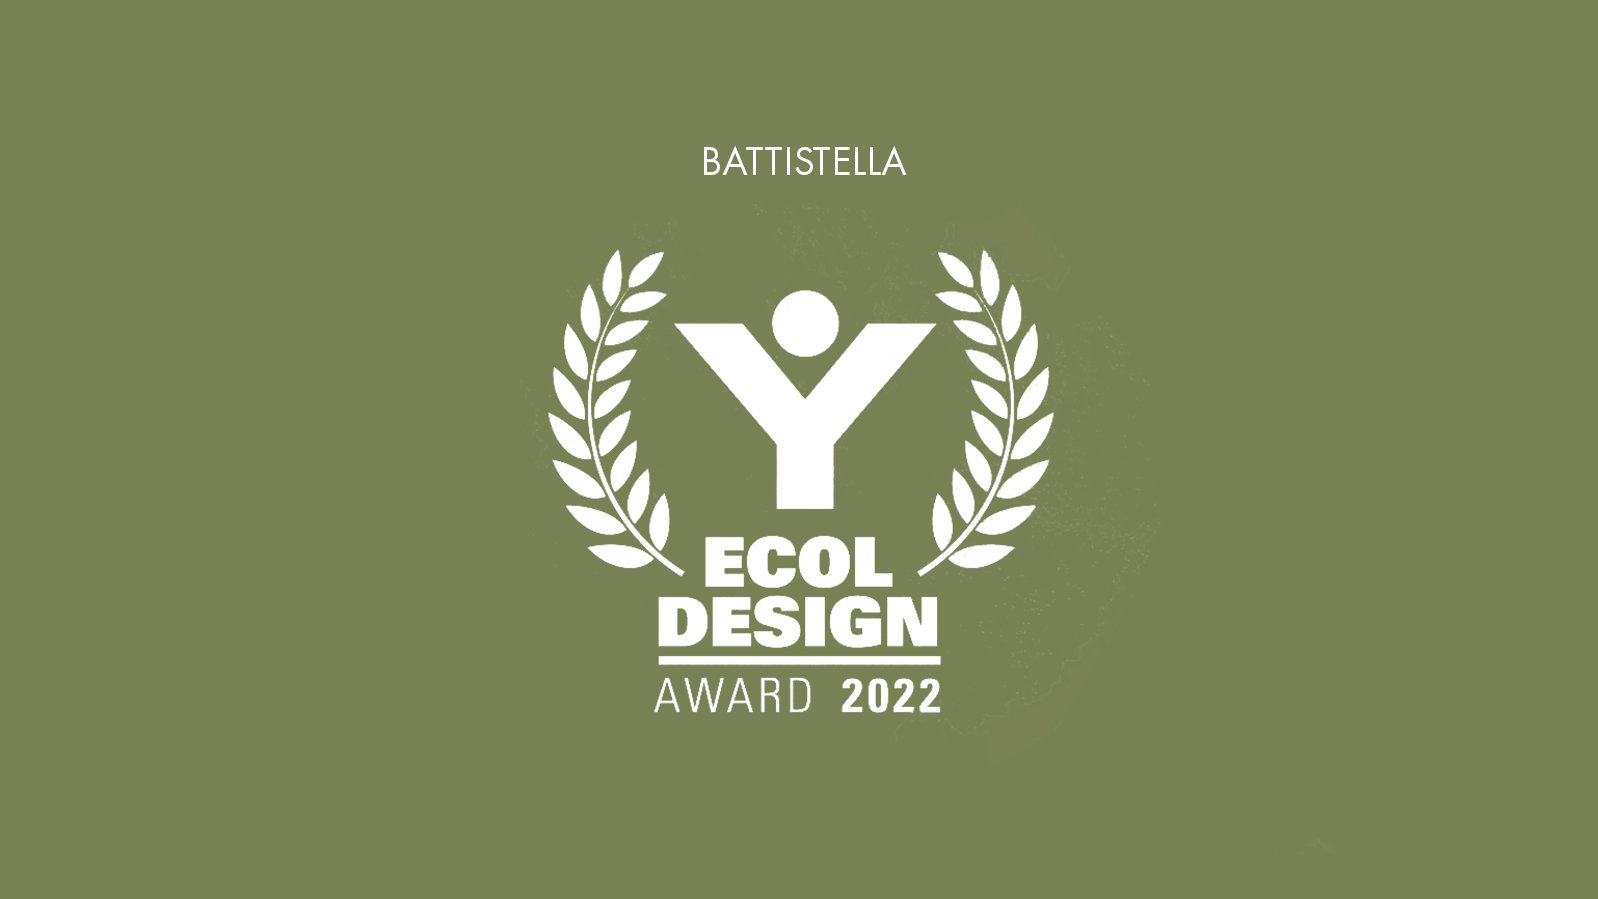 Recycla a récompensé Battistella avec l'ECOL DESIGN AWARD